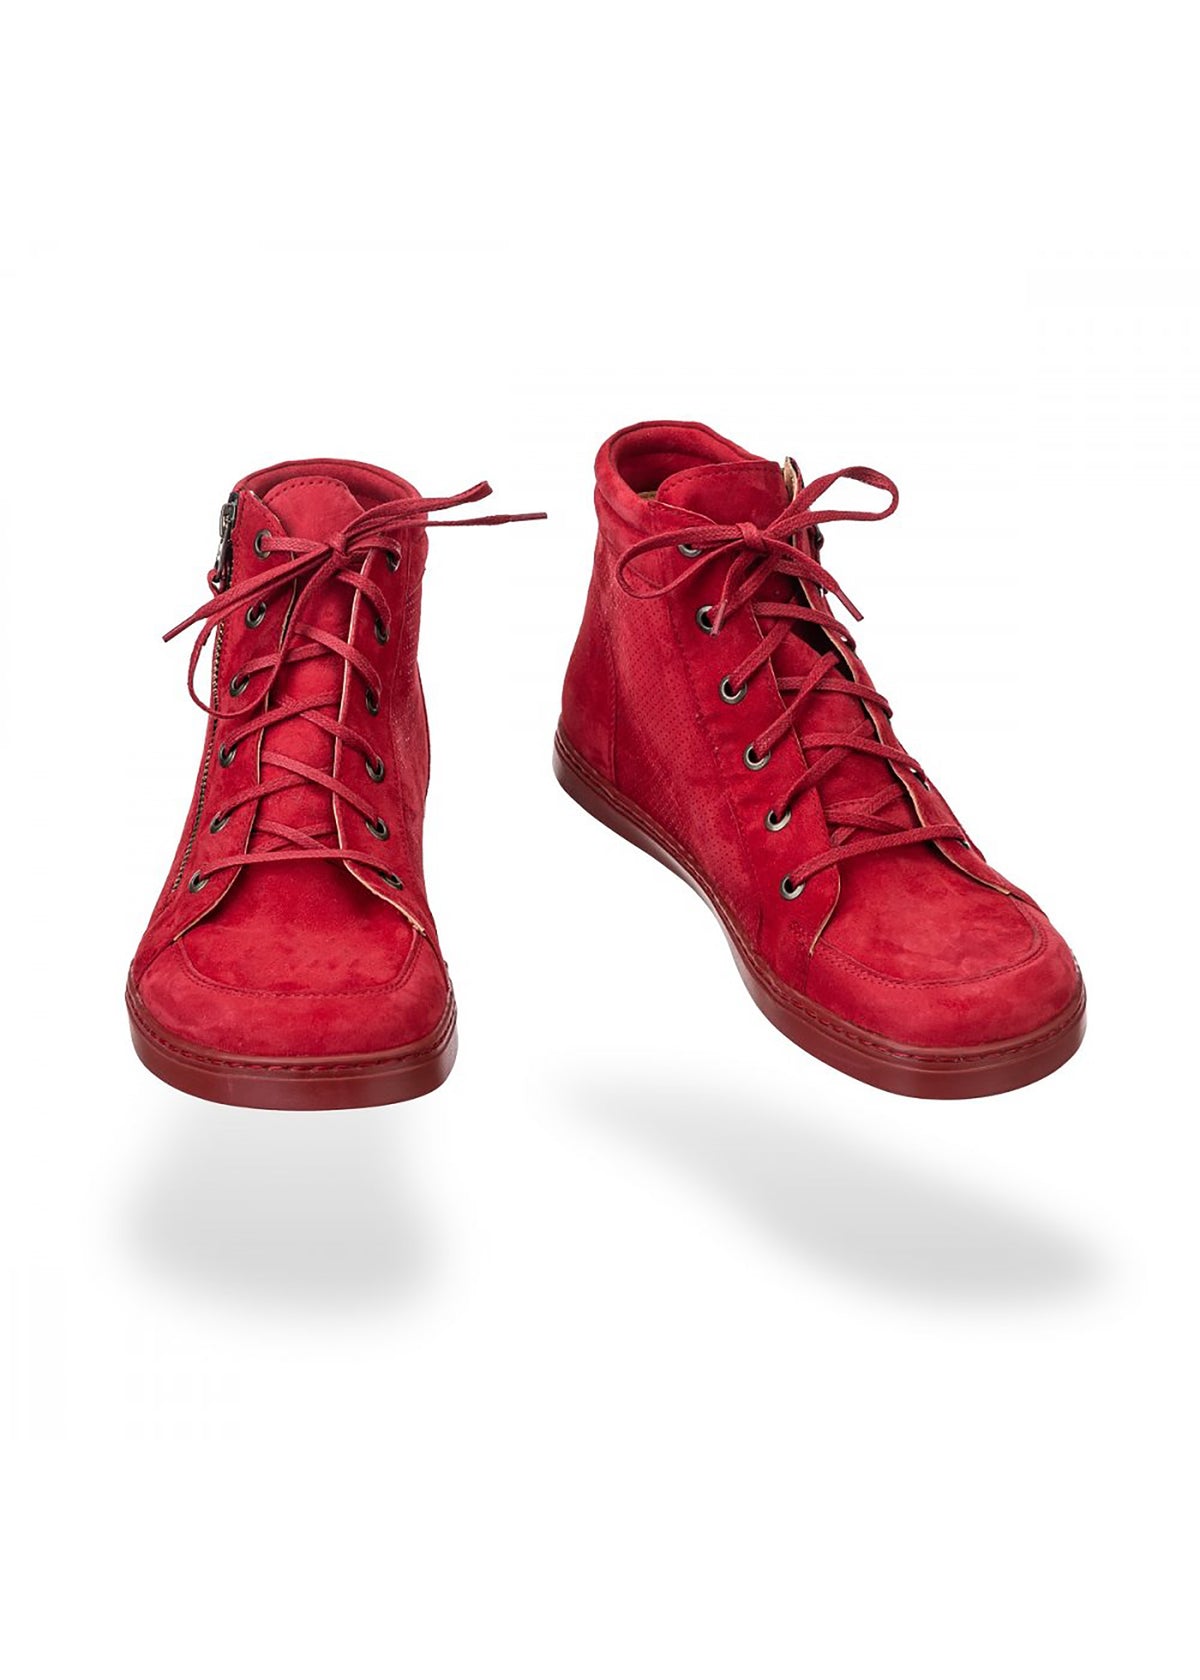 Barfotaskor, High top sneakers - Rex Red